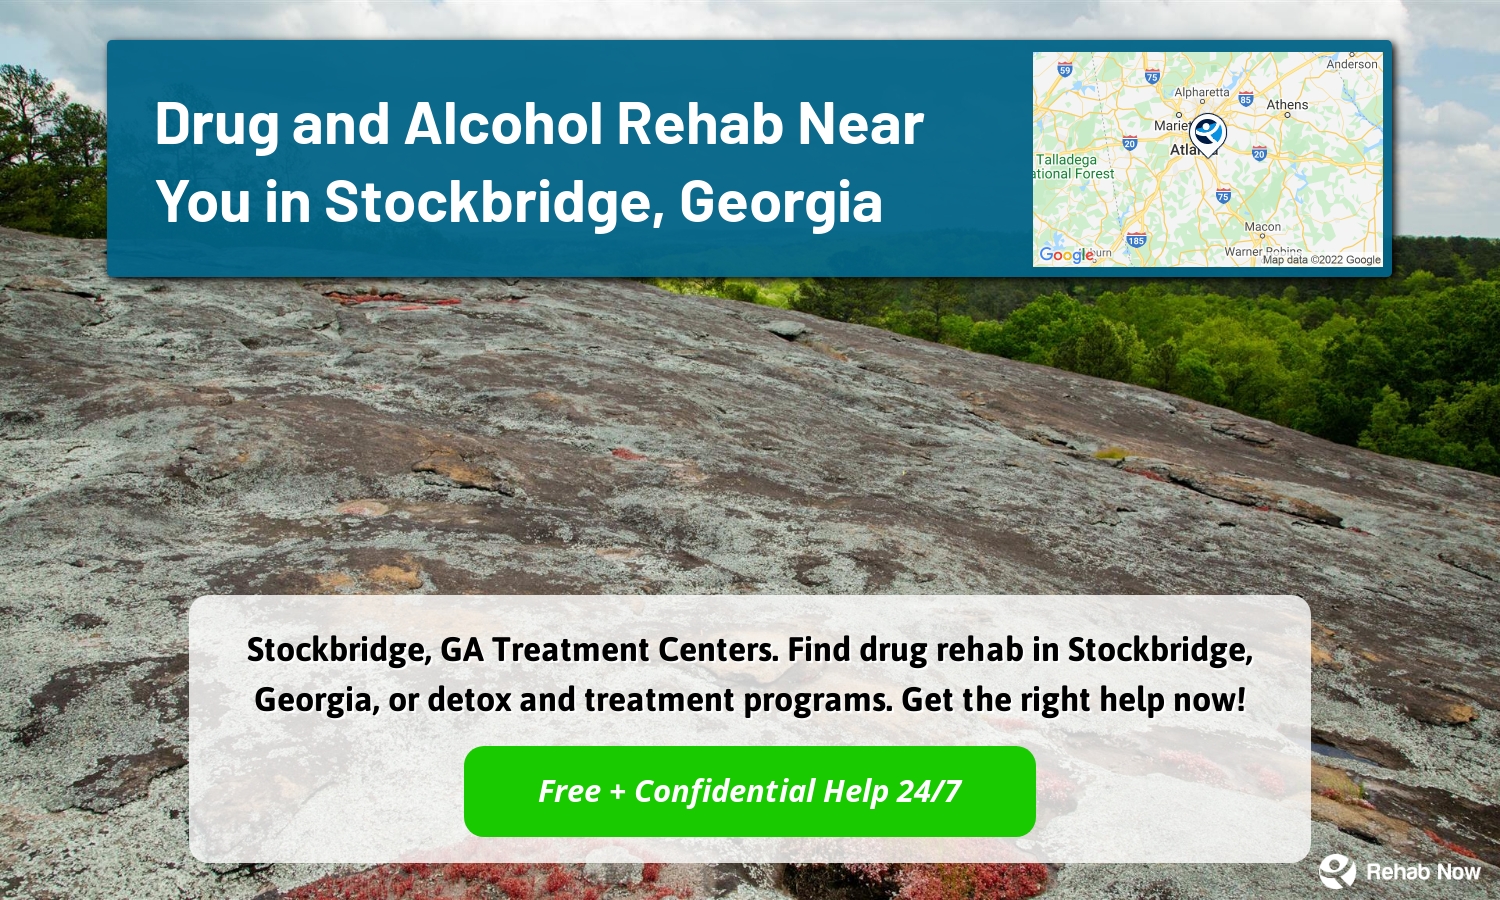 Stockbridge, GA Treatment Centers. Find drug rehab in Stockbridge, Georgia, or detox and treatment programs. Get the right help now!